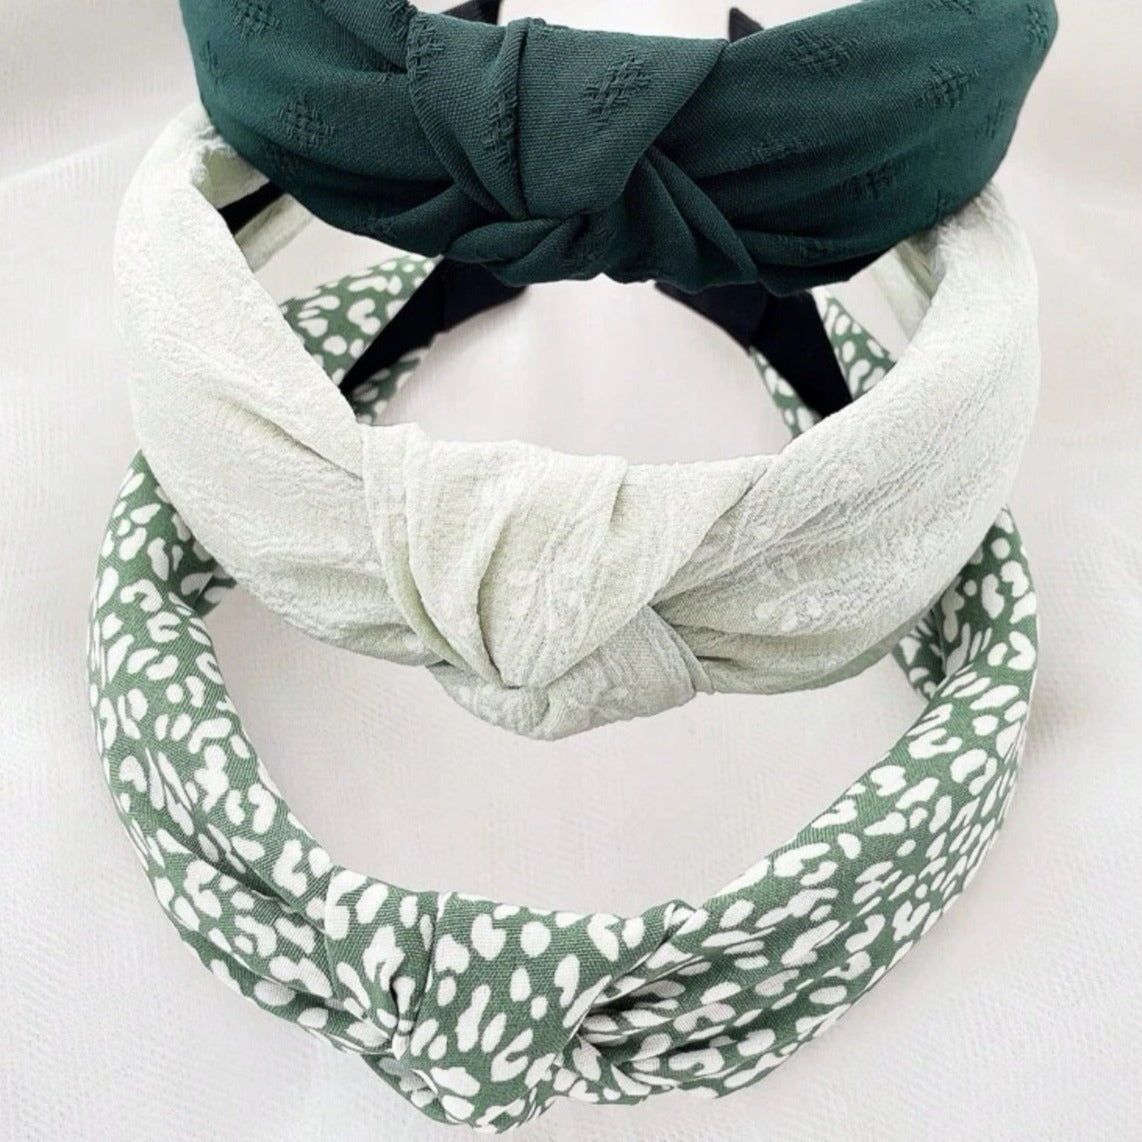 Handmade - The Green Line Headband